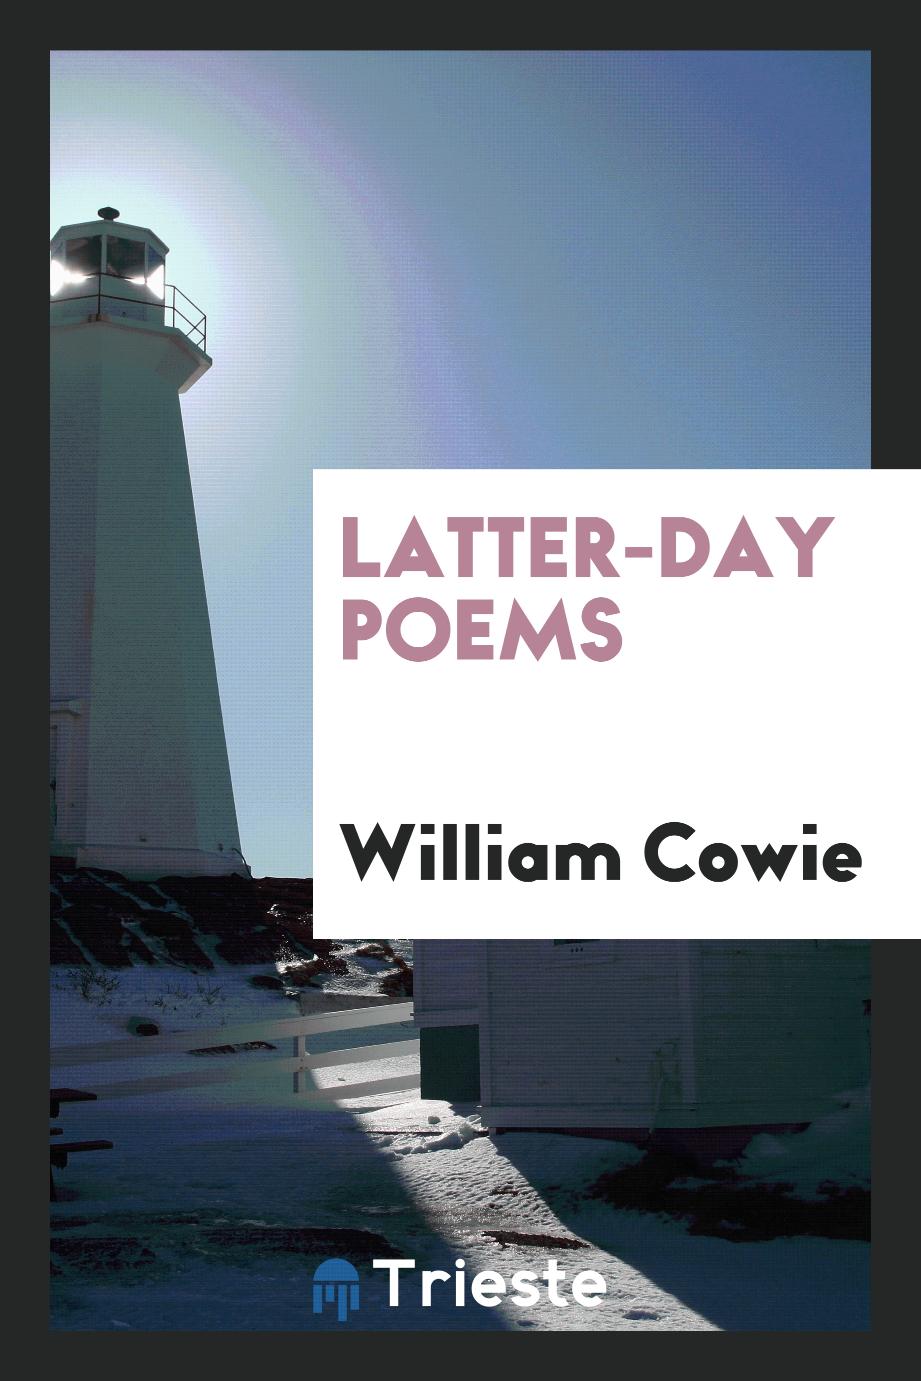 Latter-day poems